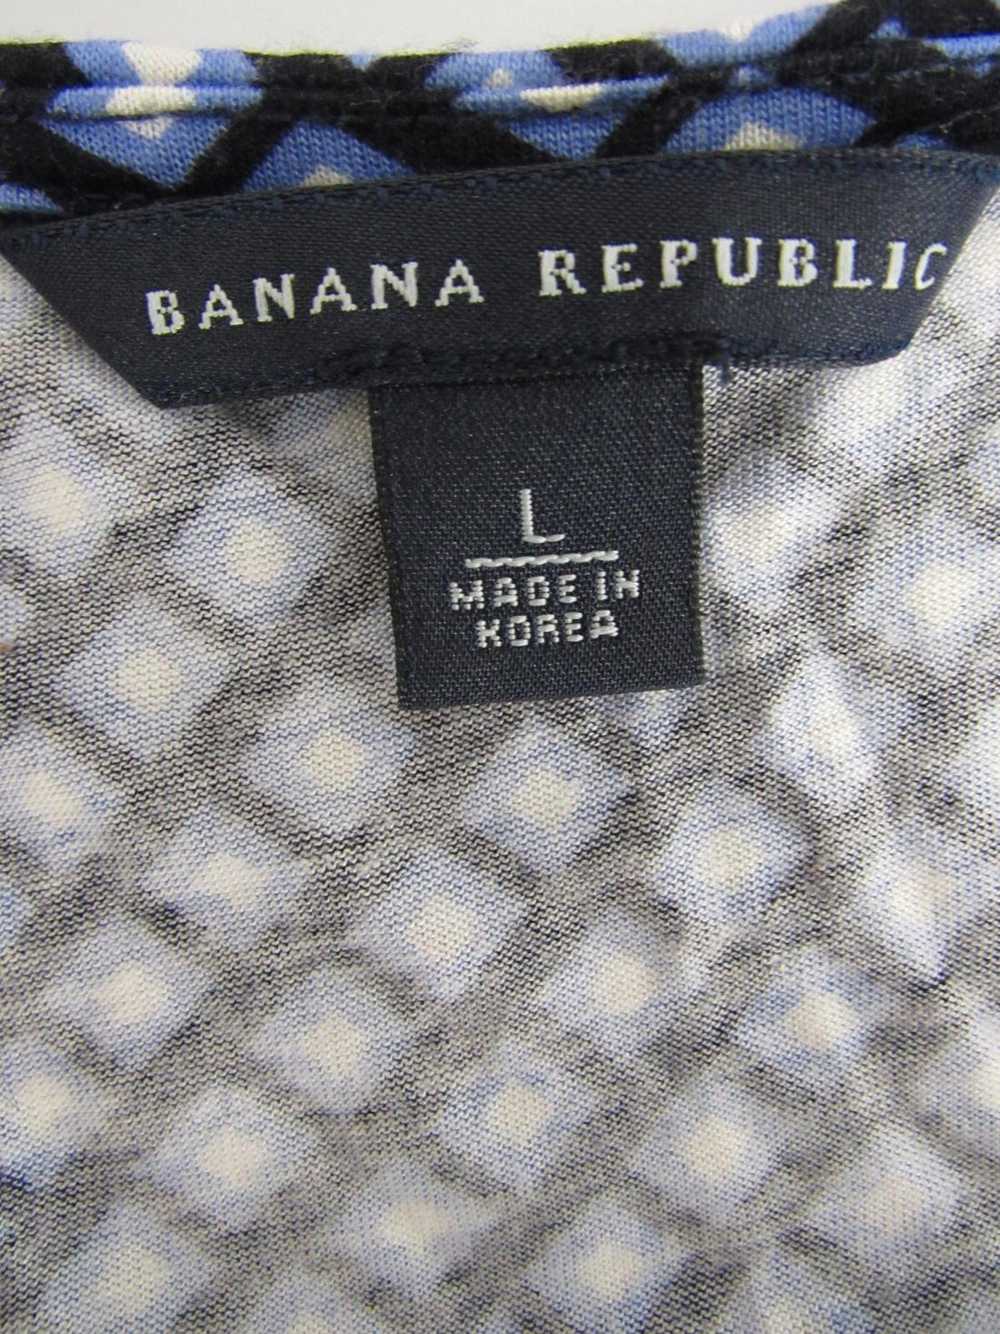 Banana Republic Blouse Top - image 3